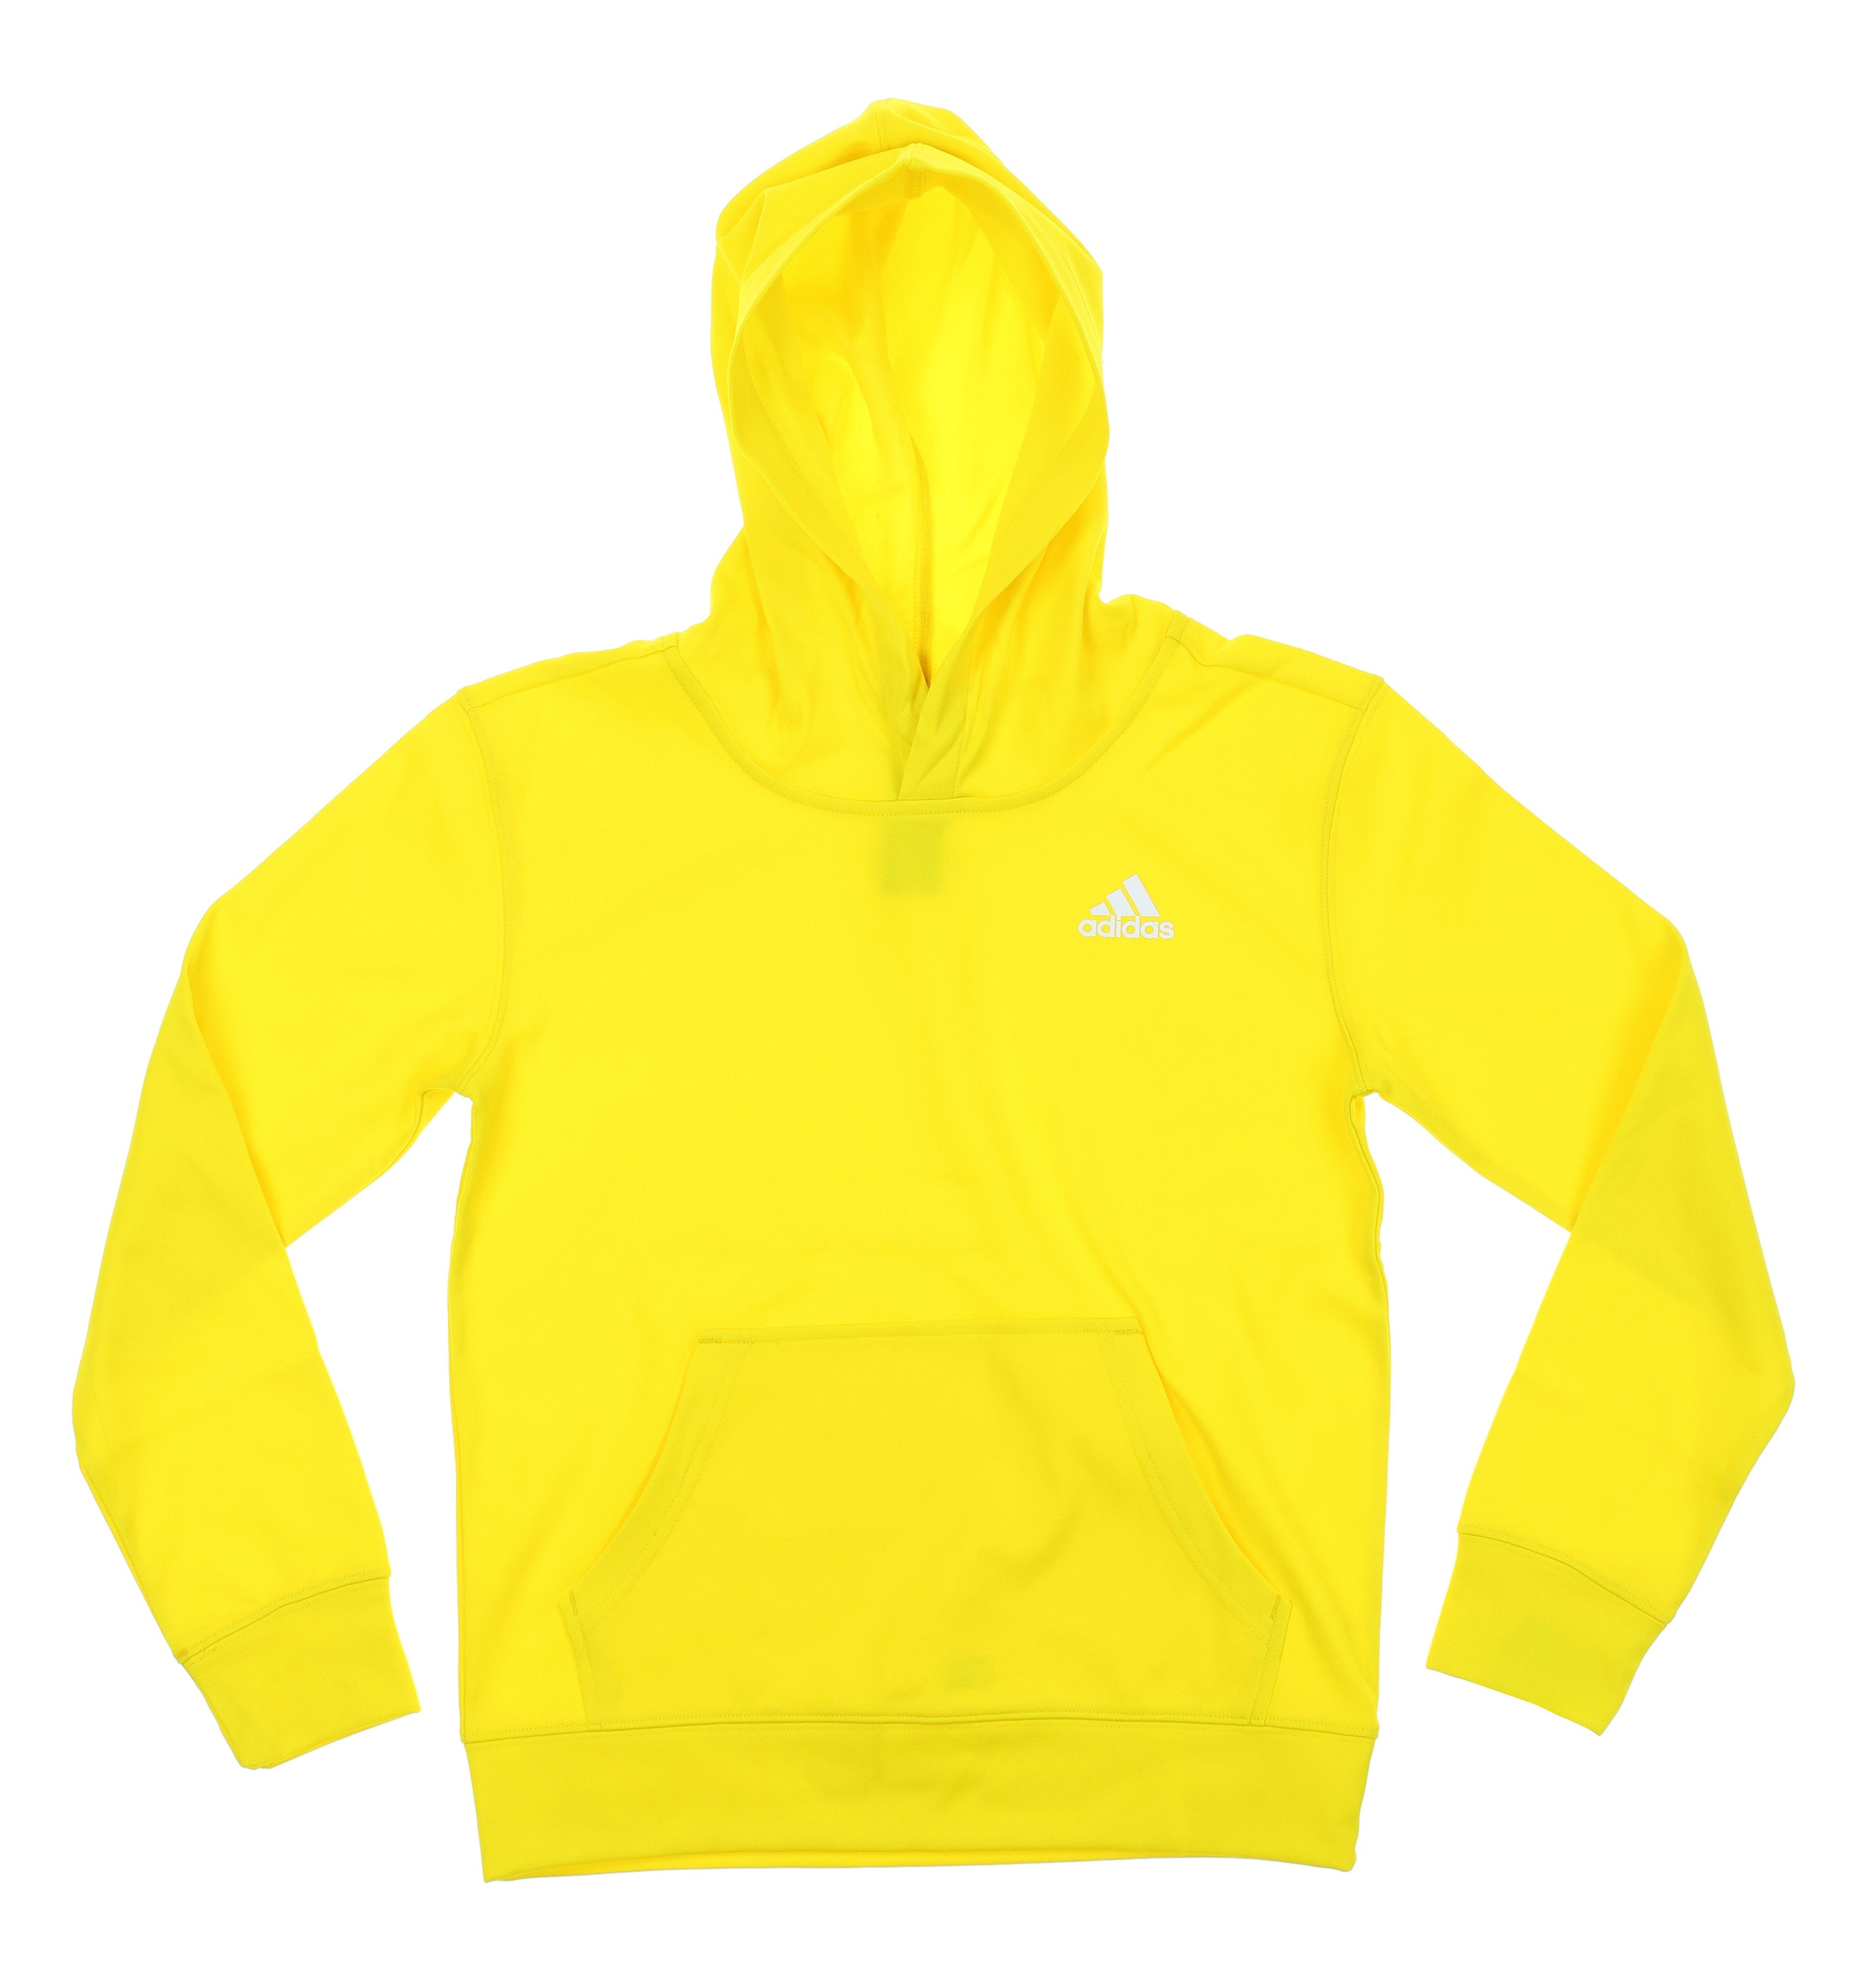 light yellow adidas hoodie